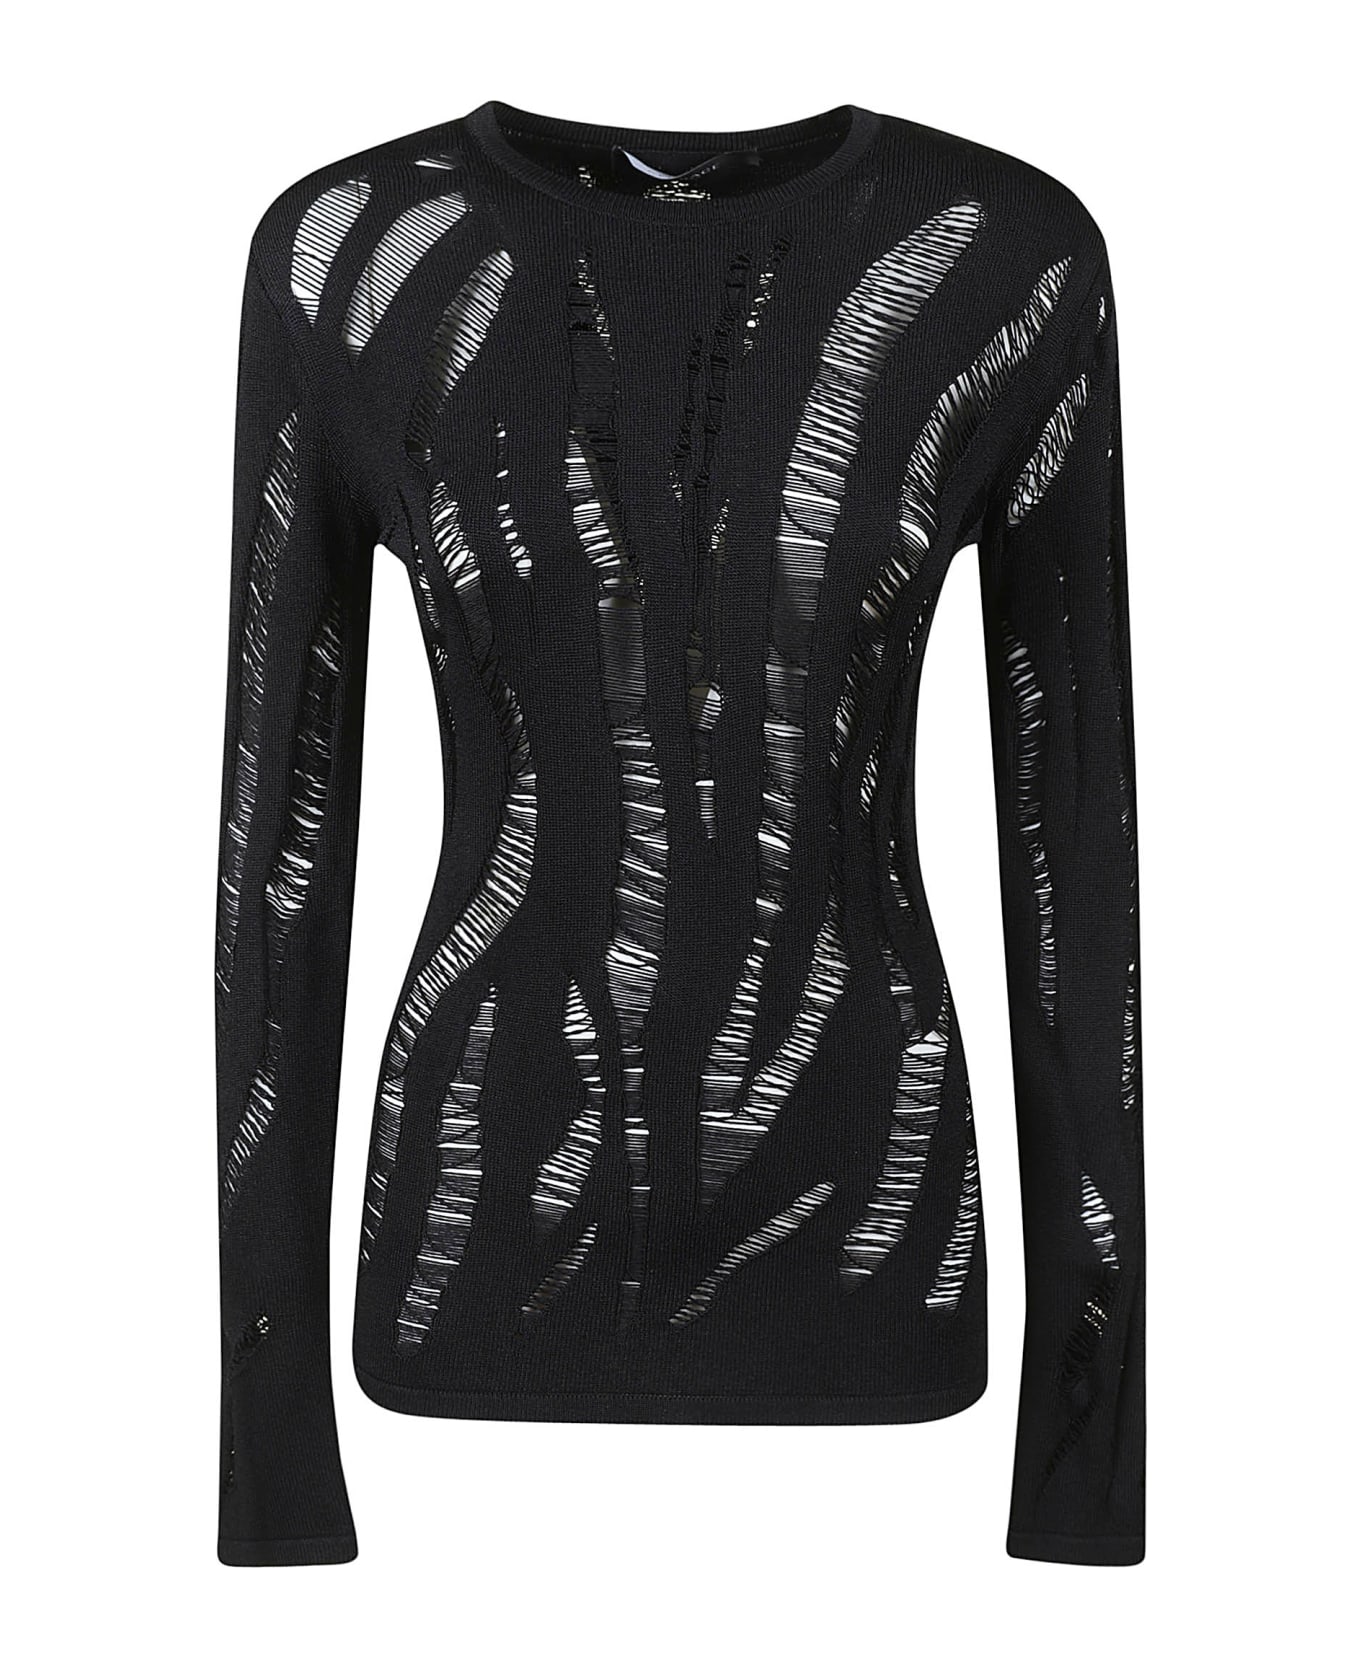 Versace Grunge Sweater - Black